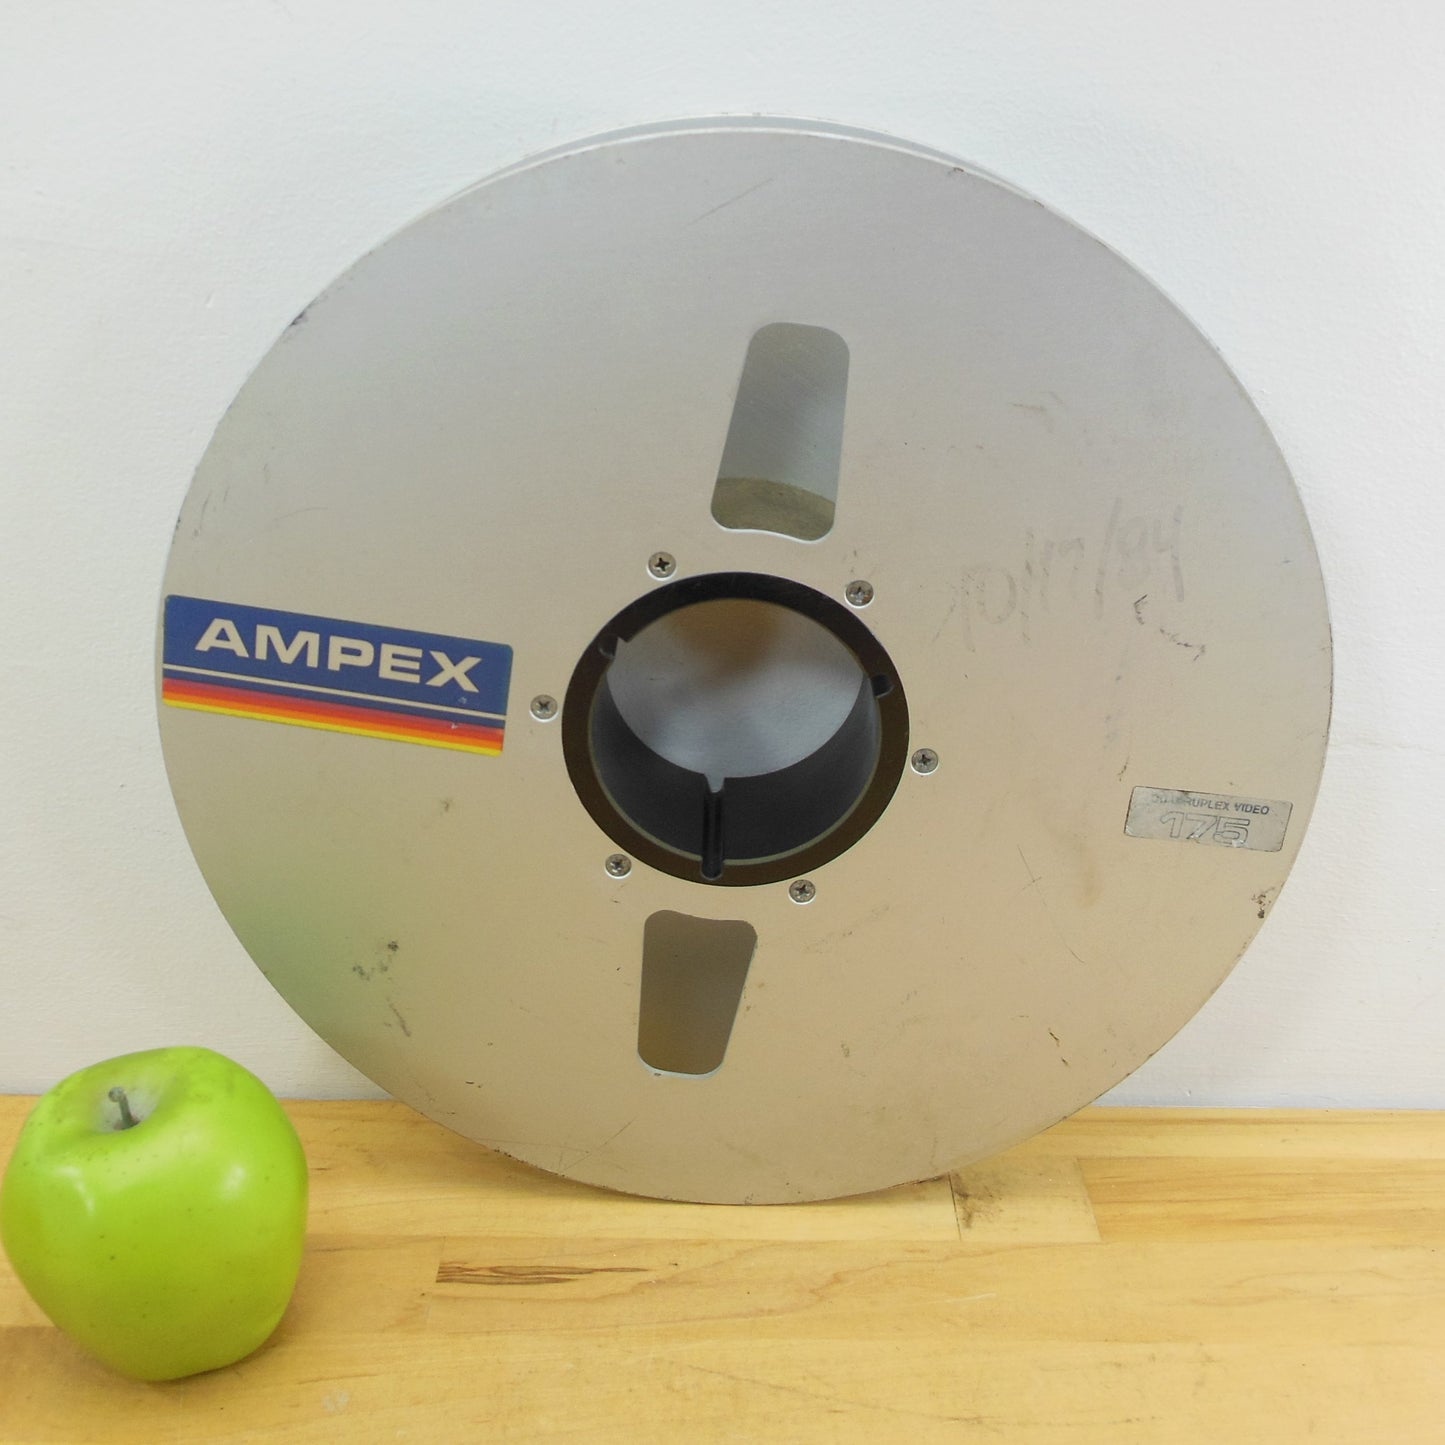 AMPEX Quadruplex Video 175 12.5" Reel